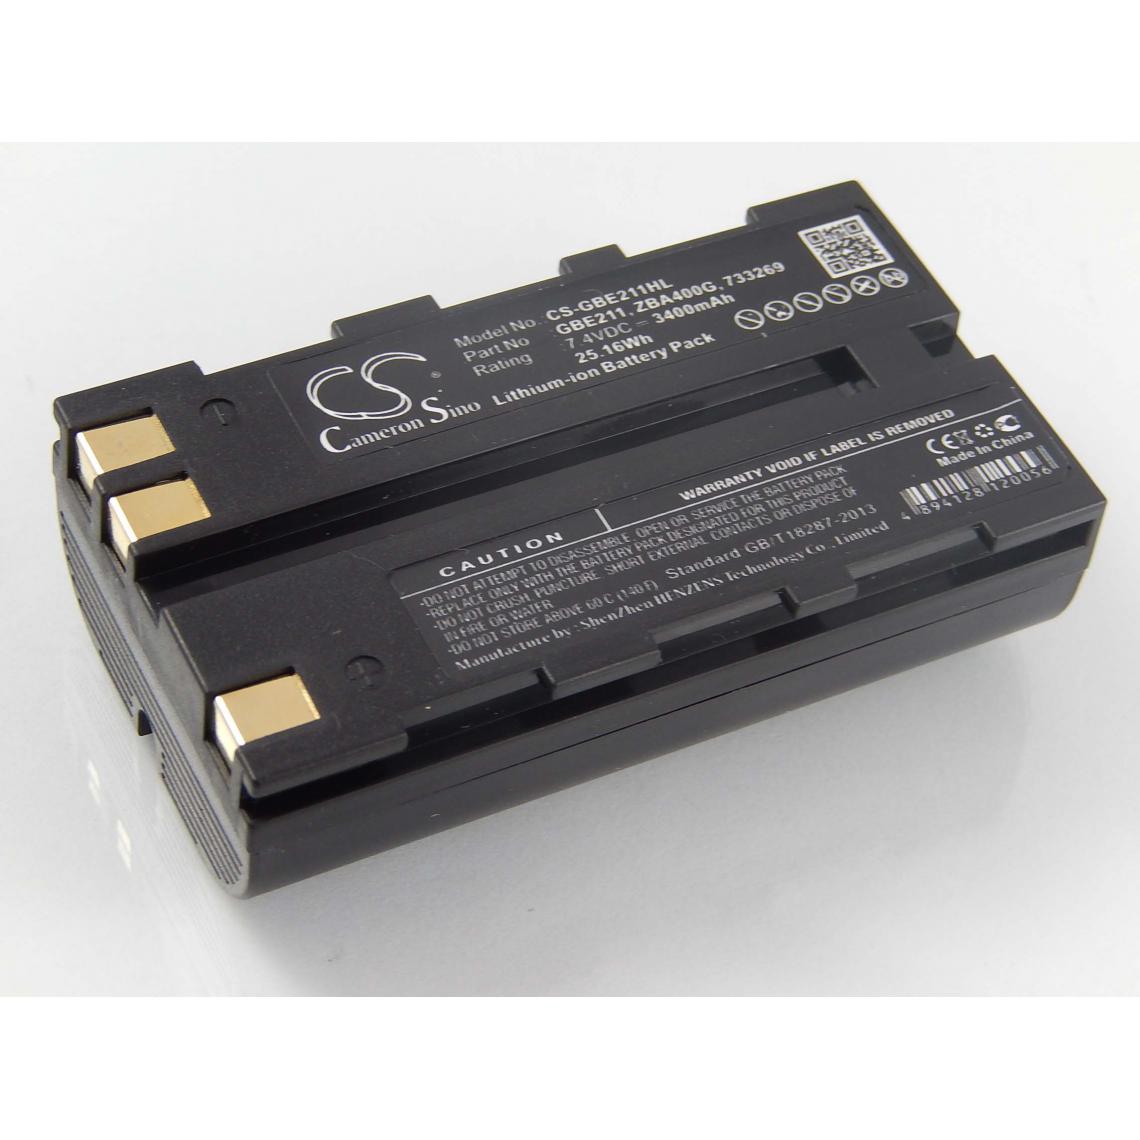 Vhbw - vhbw Batterie compatible avec Leica Flexline TS02, TS06, TS09 dispositif de mesure laser, outil de mesure (3400mAh, 7,4V, Li-ion) - Piles rechargeables